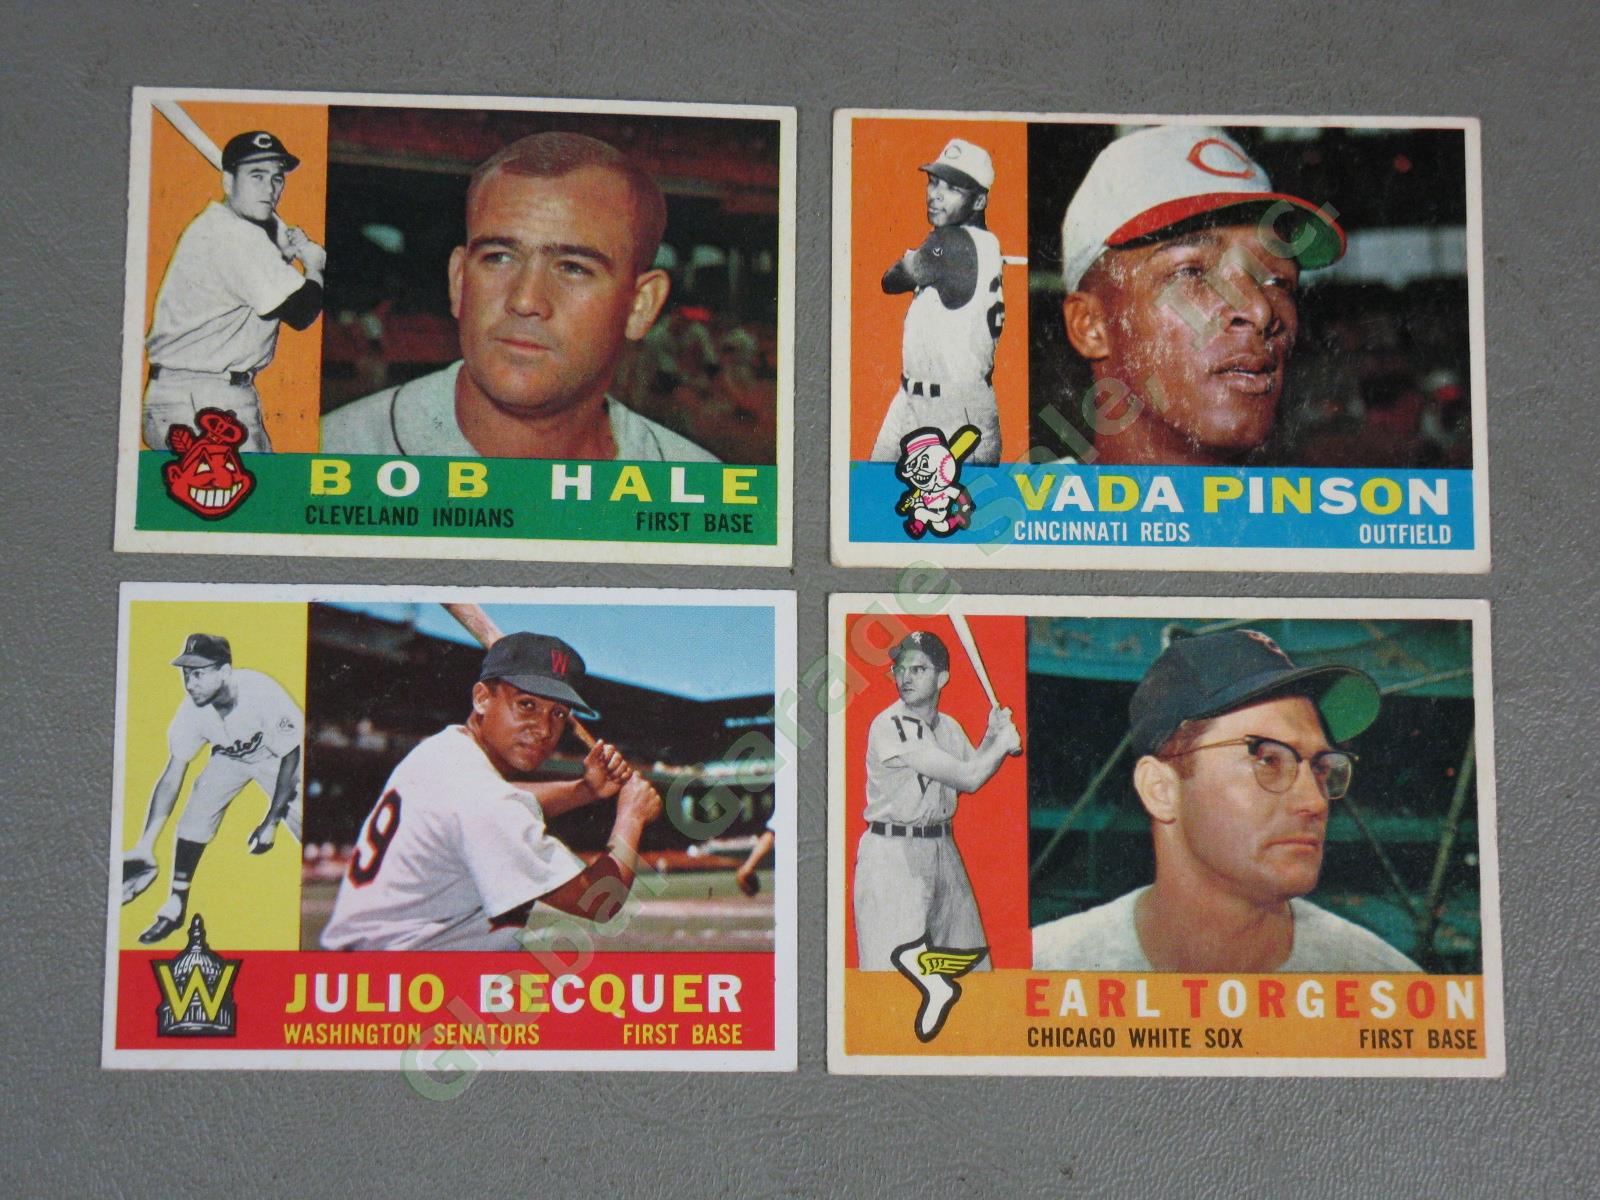 165 VtgTopps 1960 Baseball Card Collection Lot Rookies Teams Senators Braves NR! 5